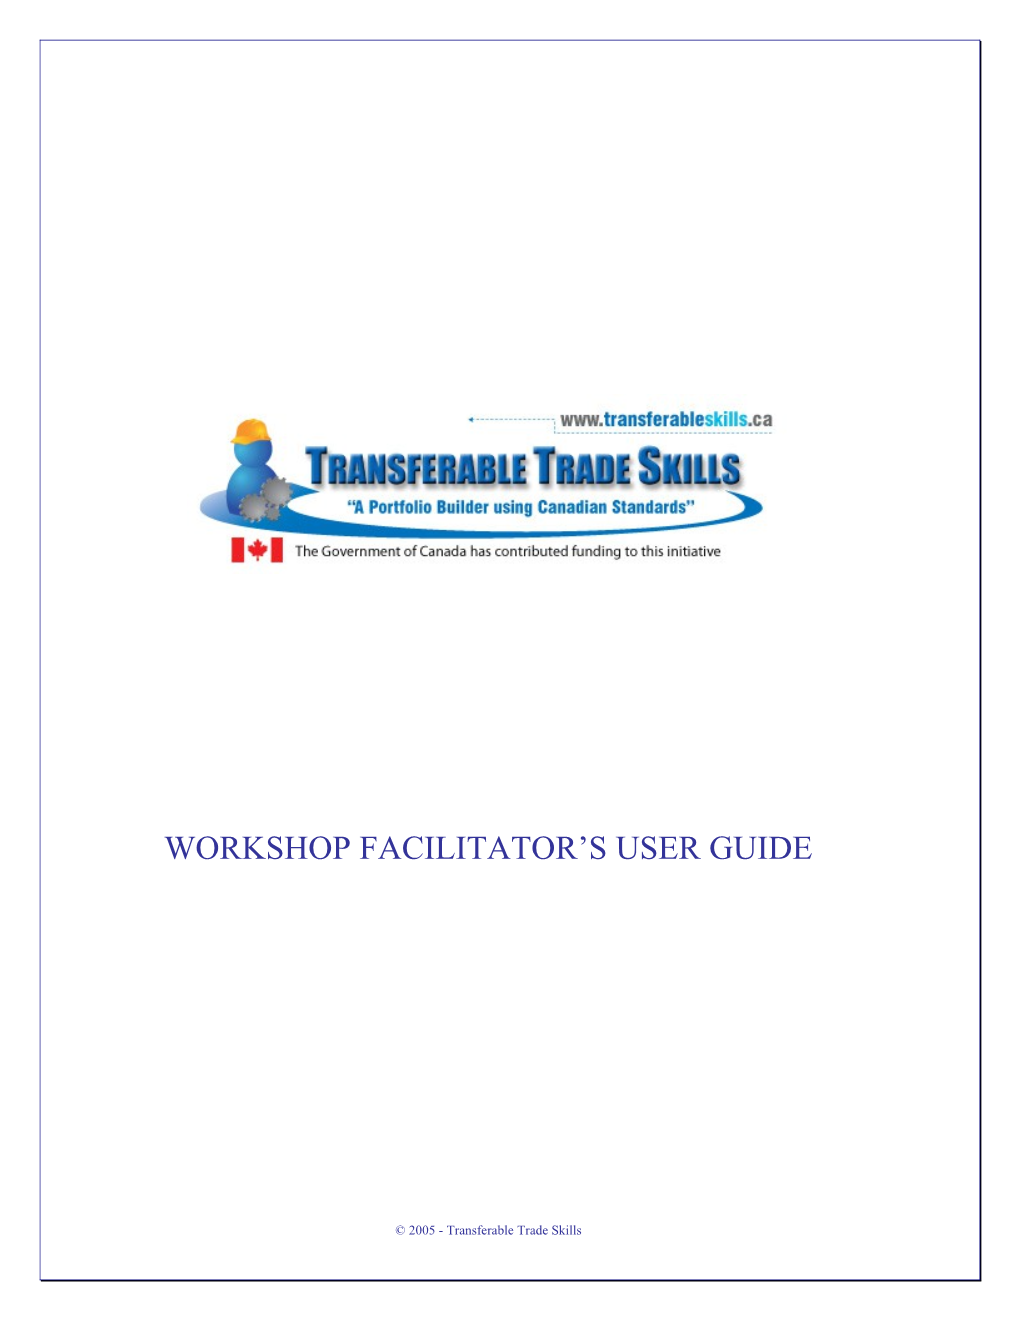 Transferable Trade Skills User Guide